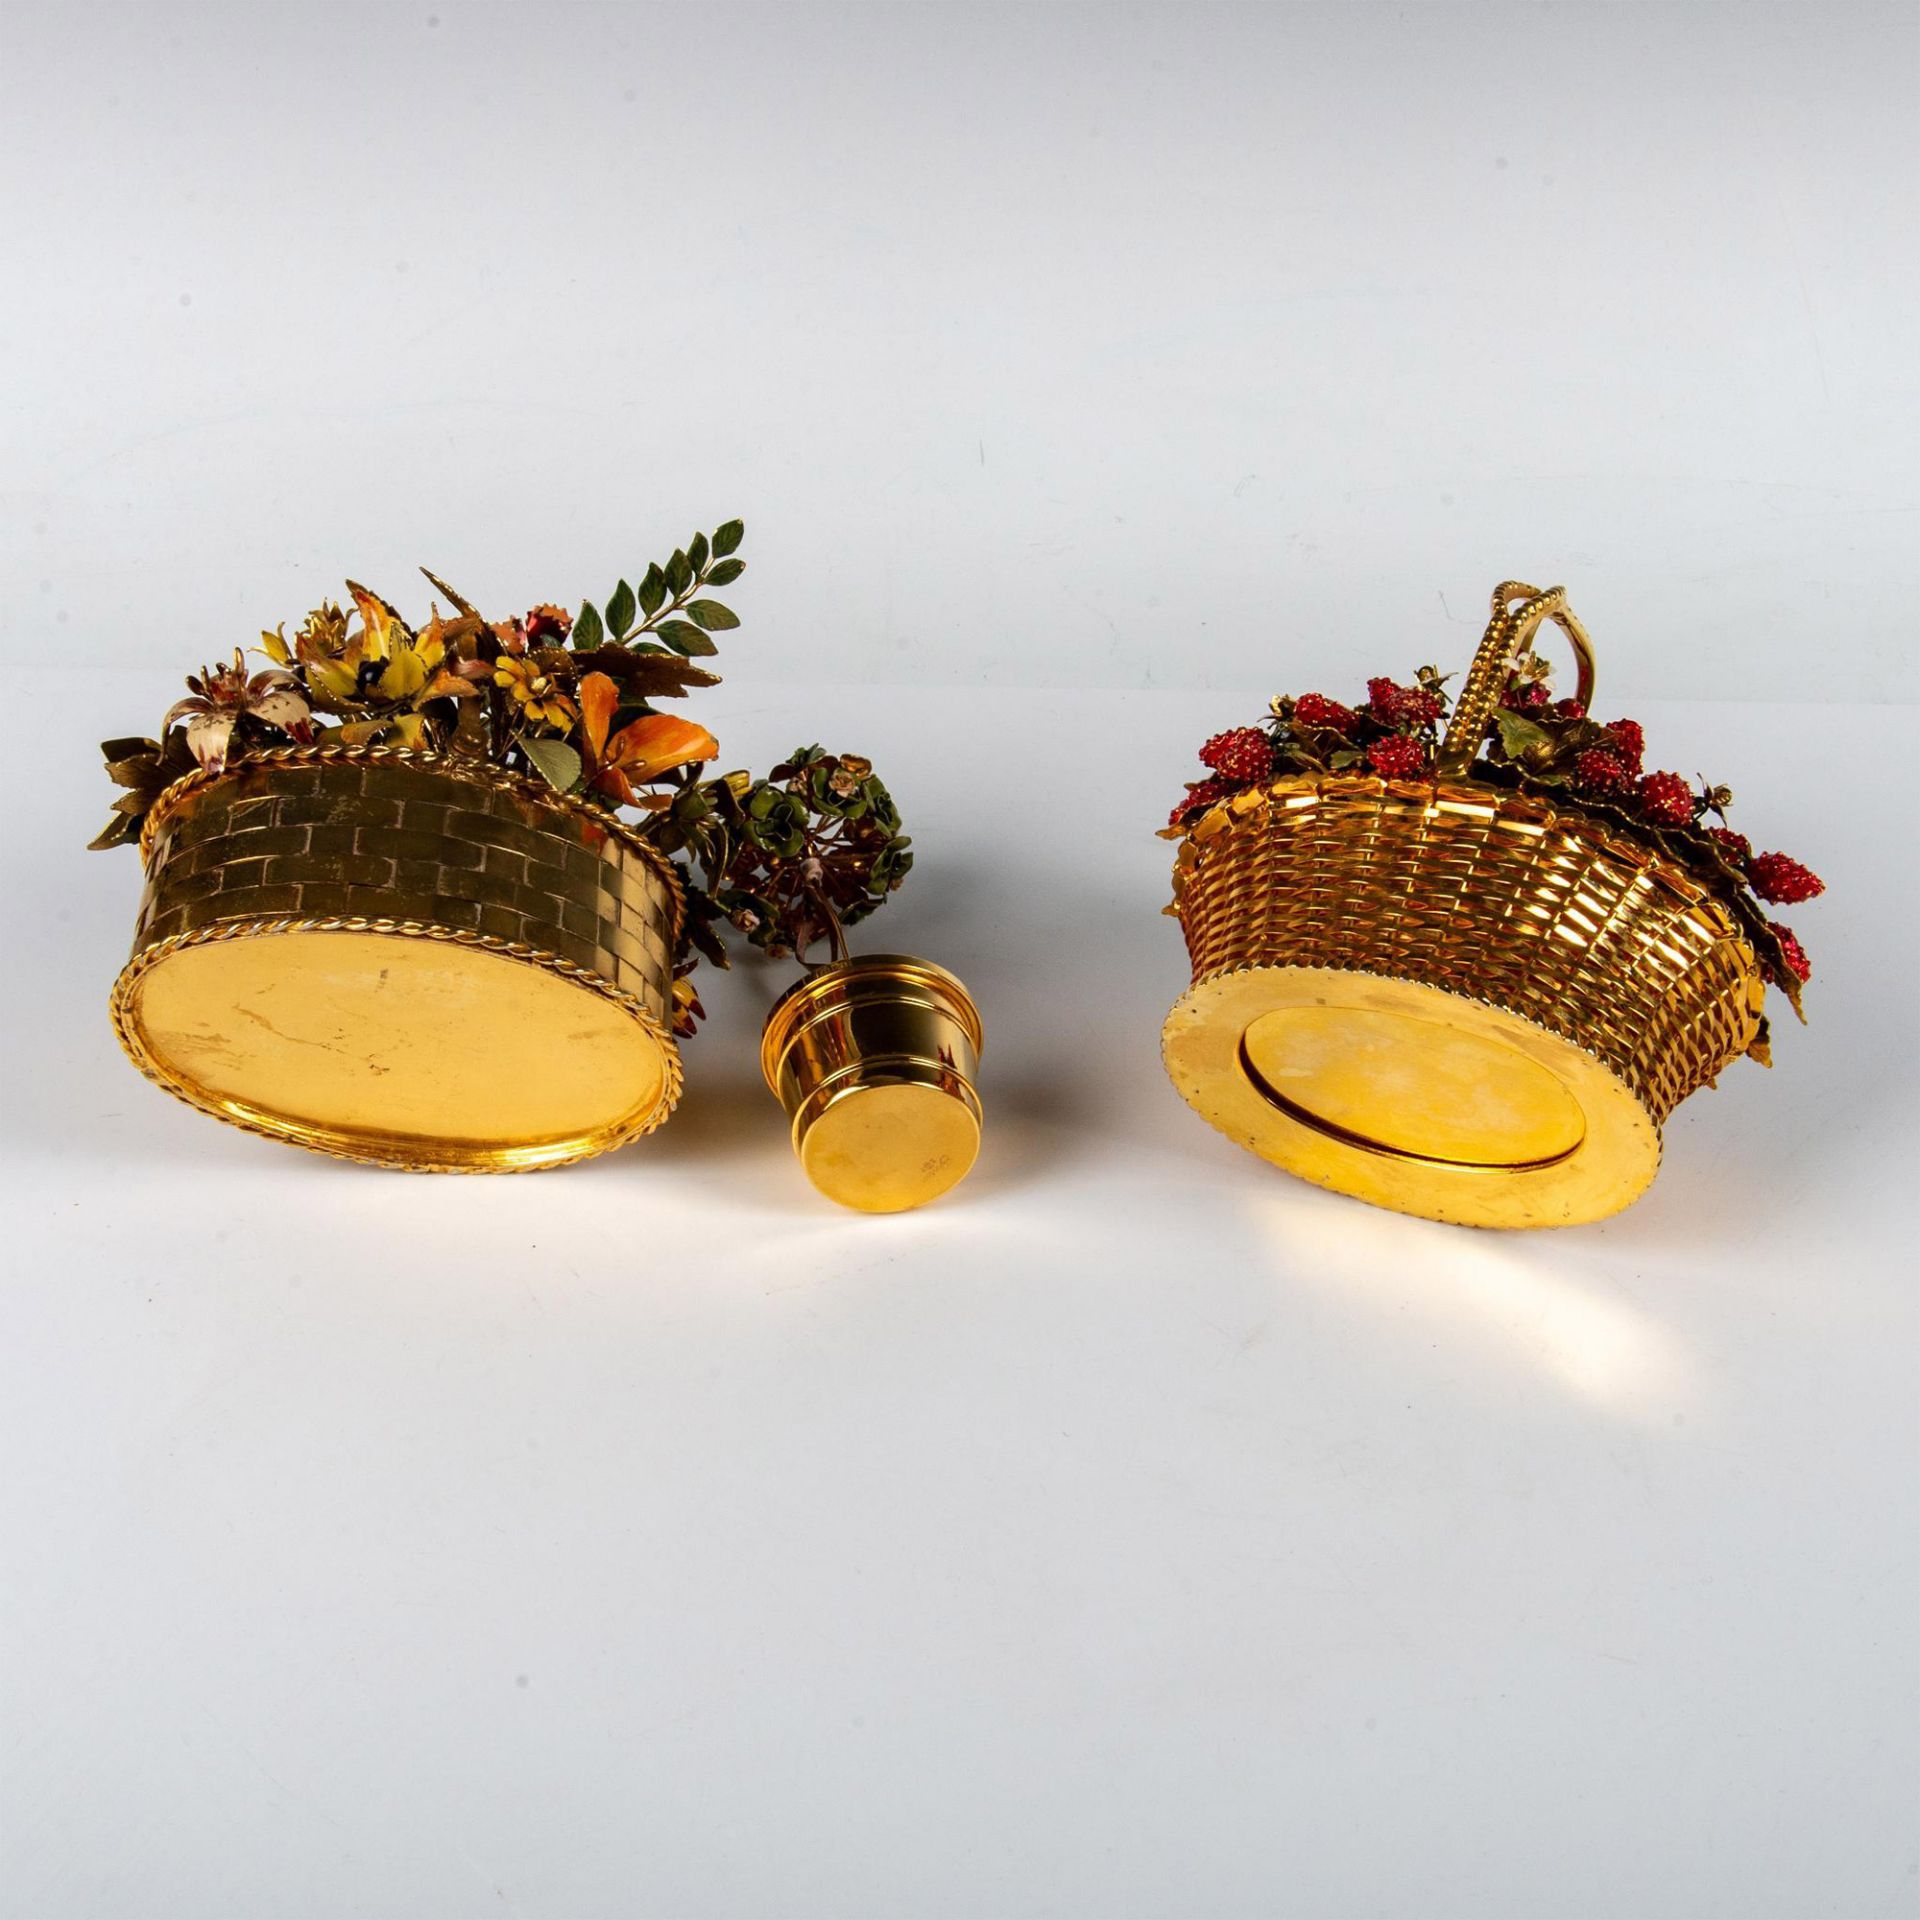 3pc Gorham Gold Plated Tree Sculpture & Enamel Flower Baskets - Image 6 of 6